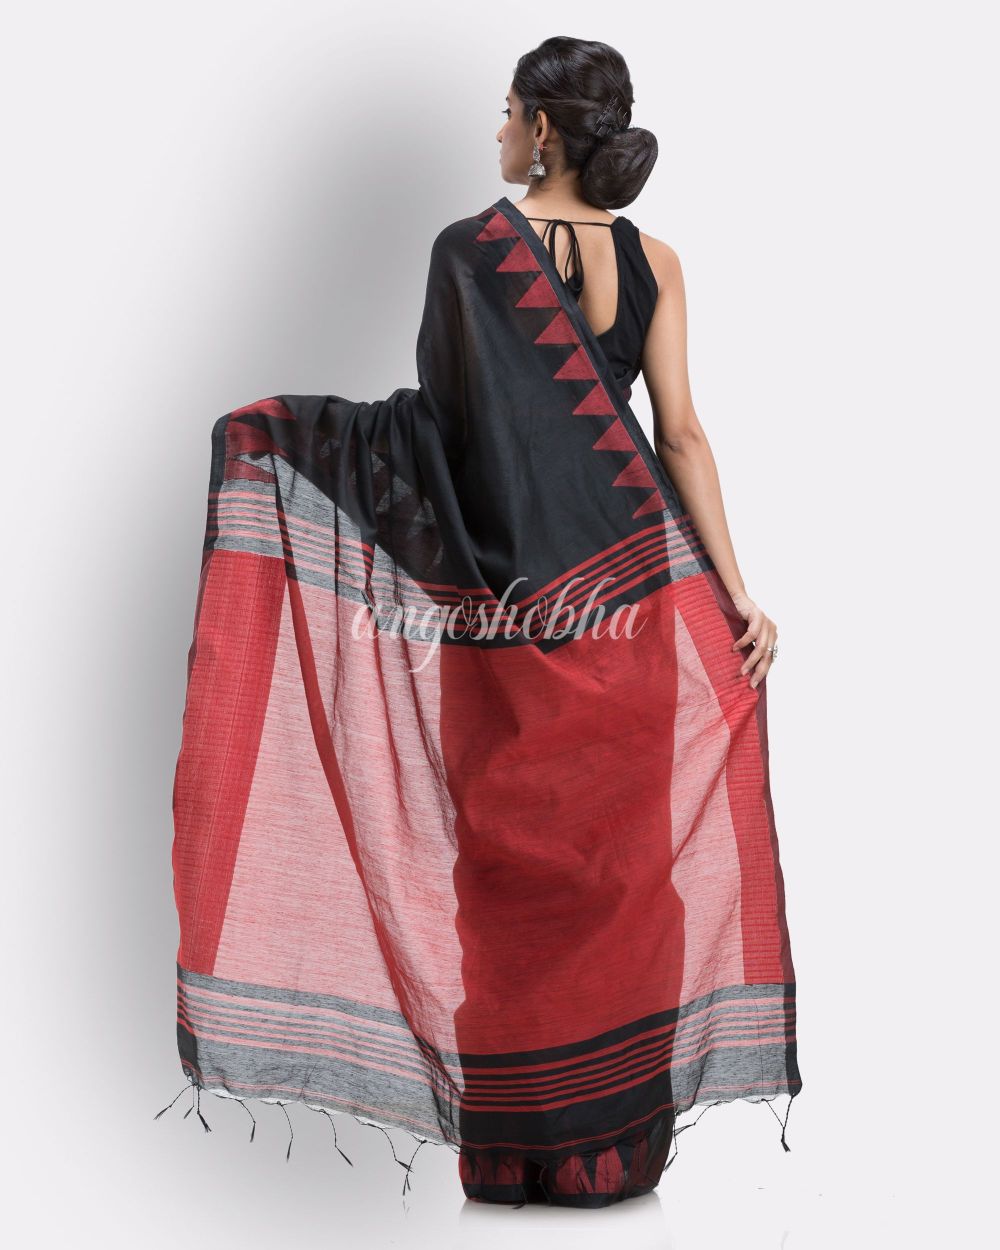 Black Handloom Cotton blend Saree angoshobha